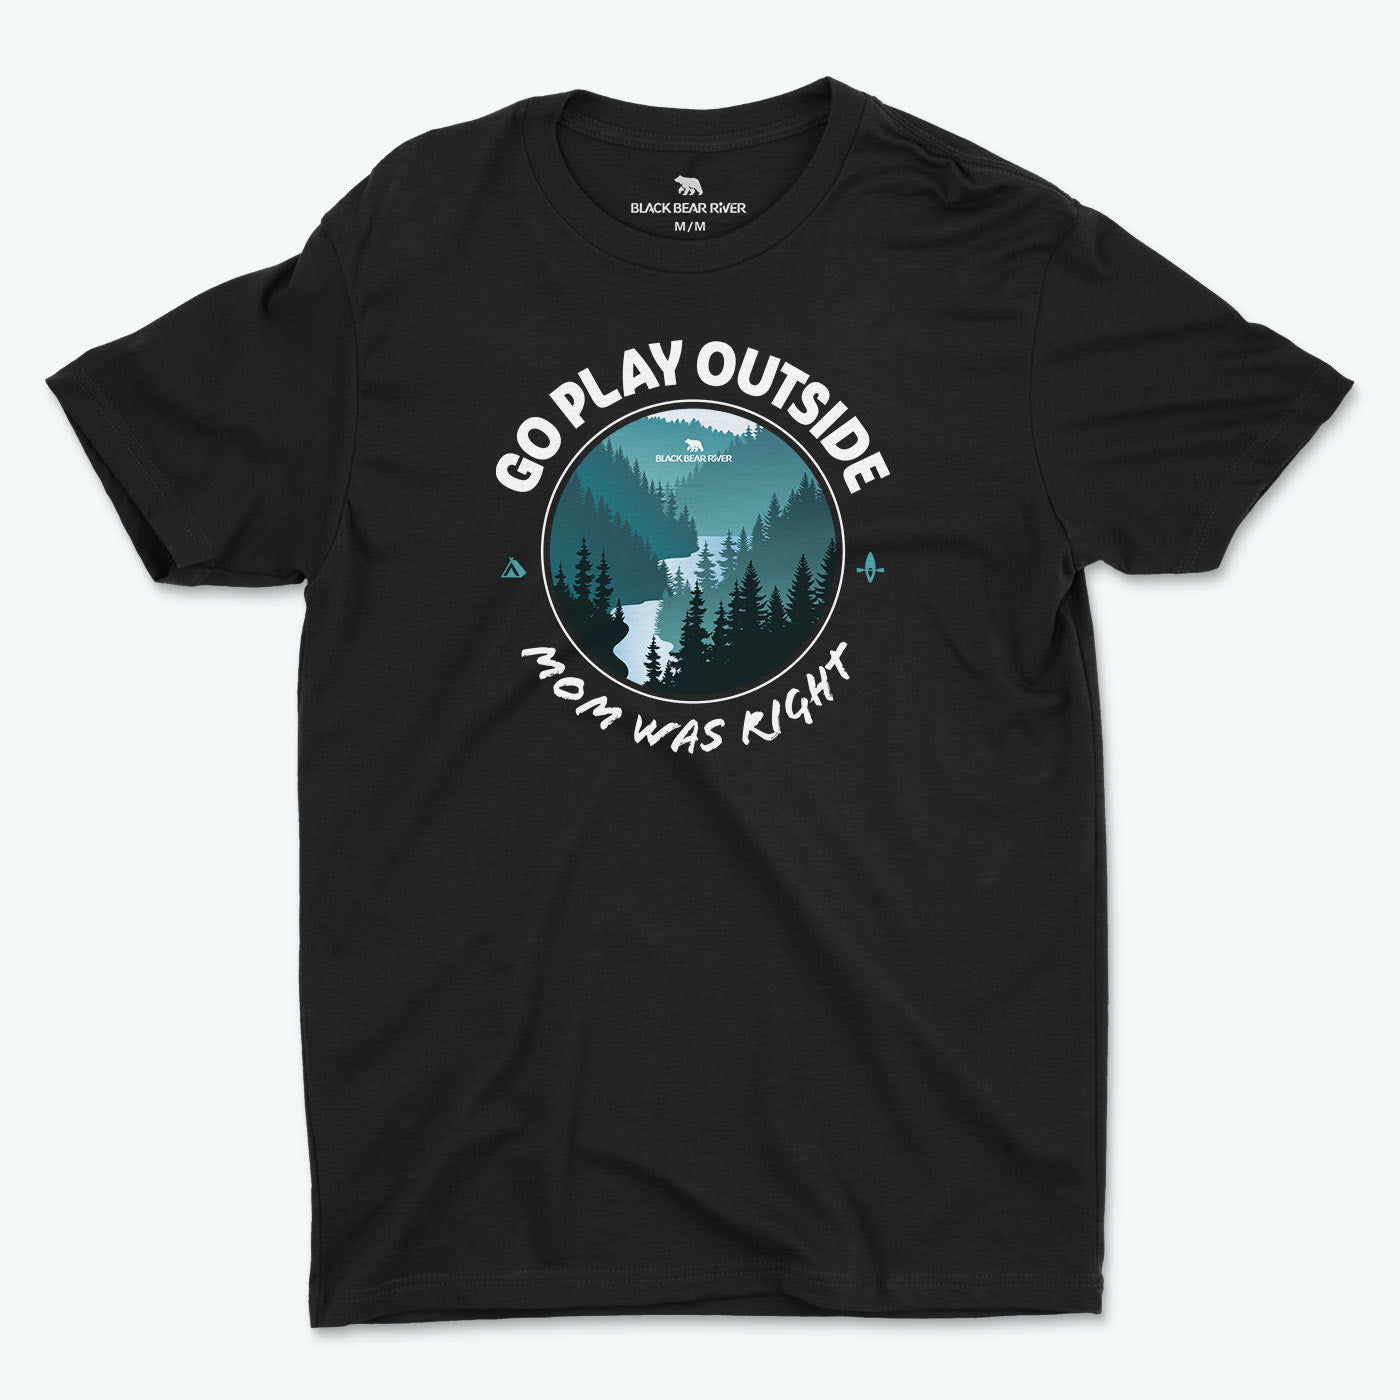 Go Play Outside T-Shirt